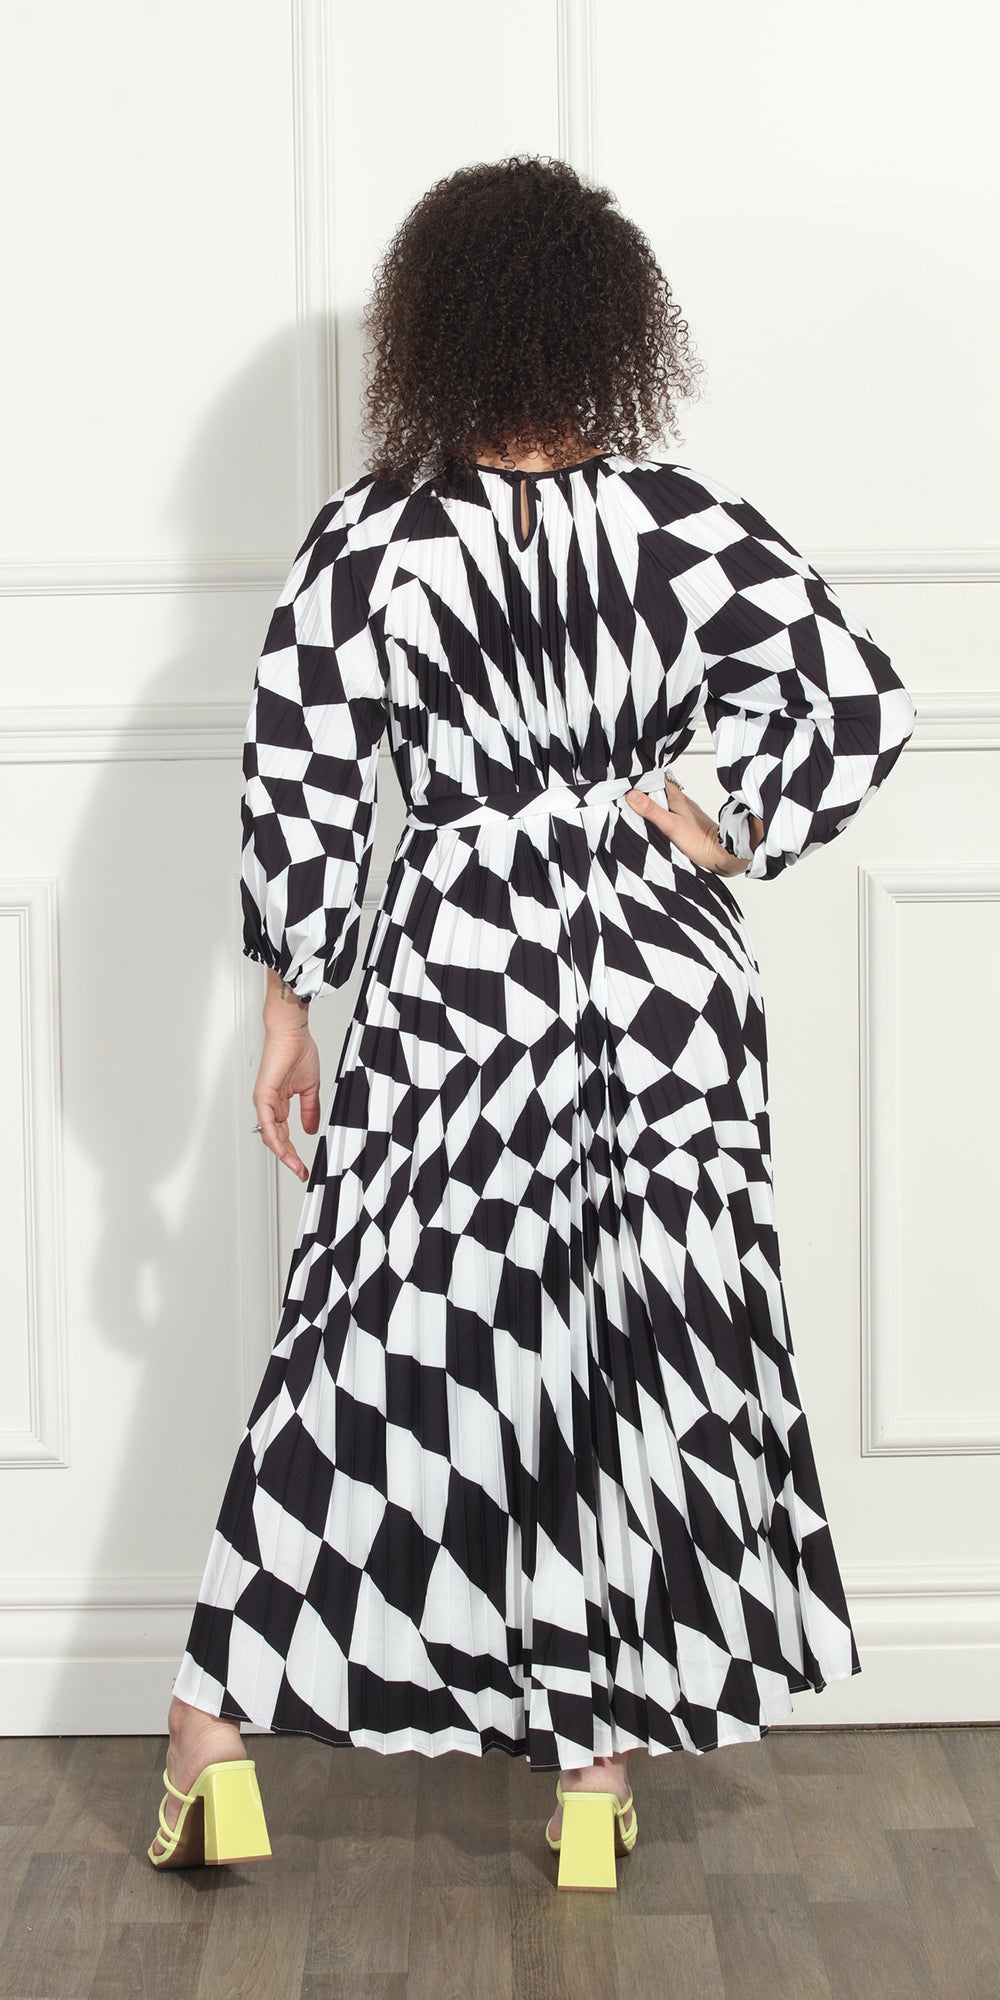 Luxe Moda LM300 - Black White - Geometric Print Dress